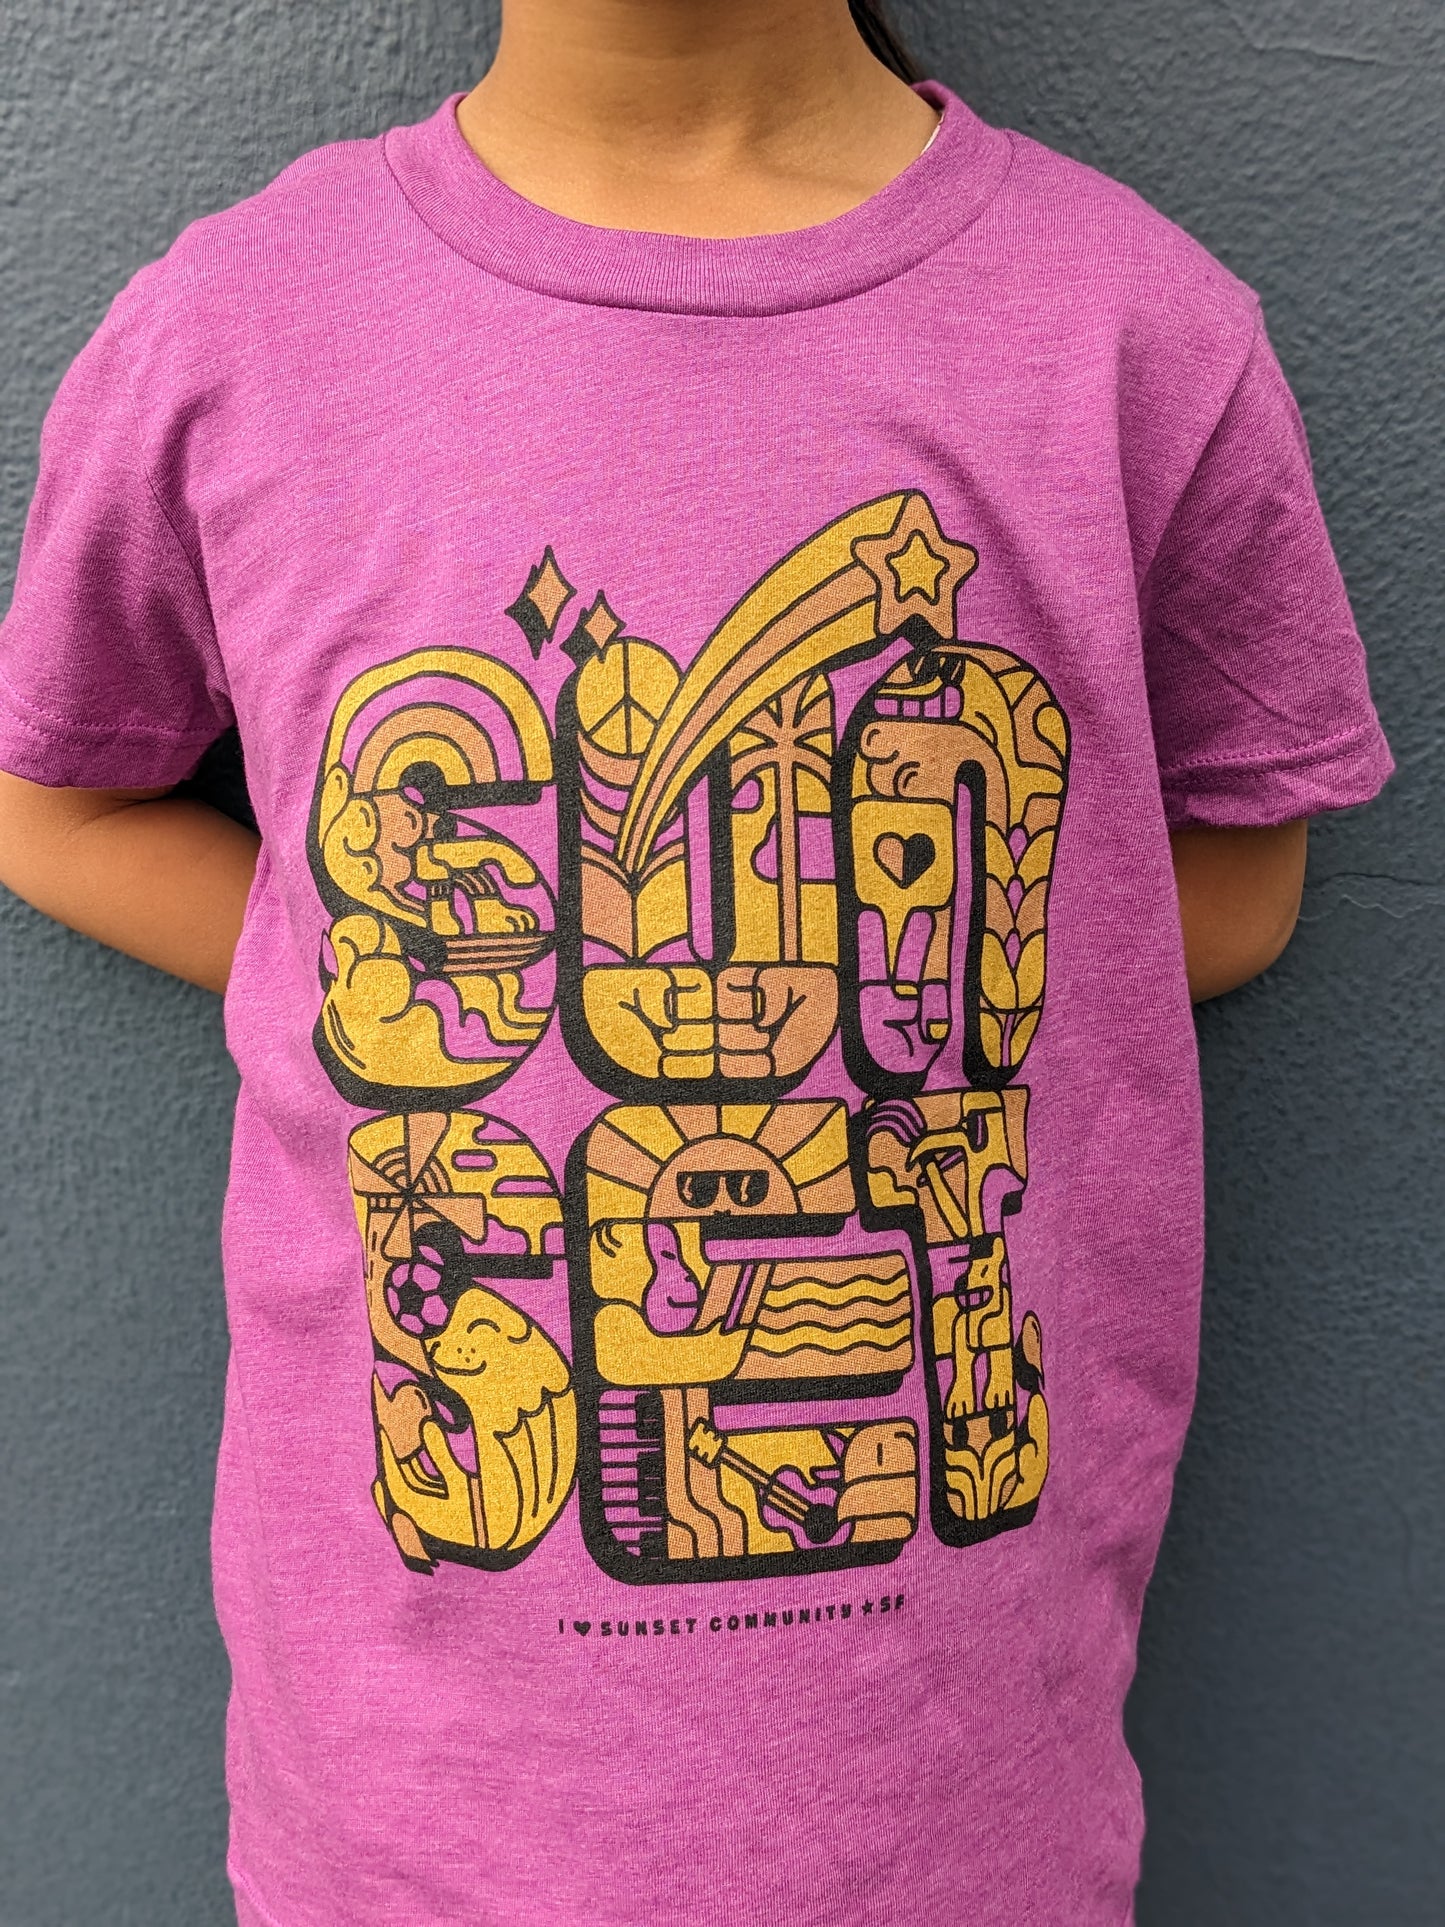 Sunset Youth Community T-Shirt in Heather Magenta (Purple)